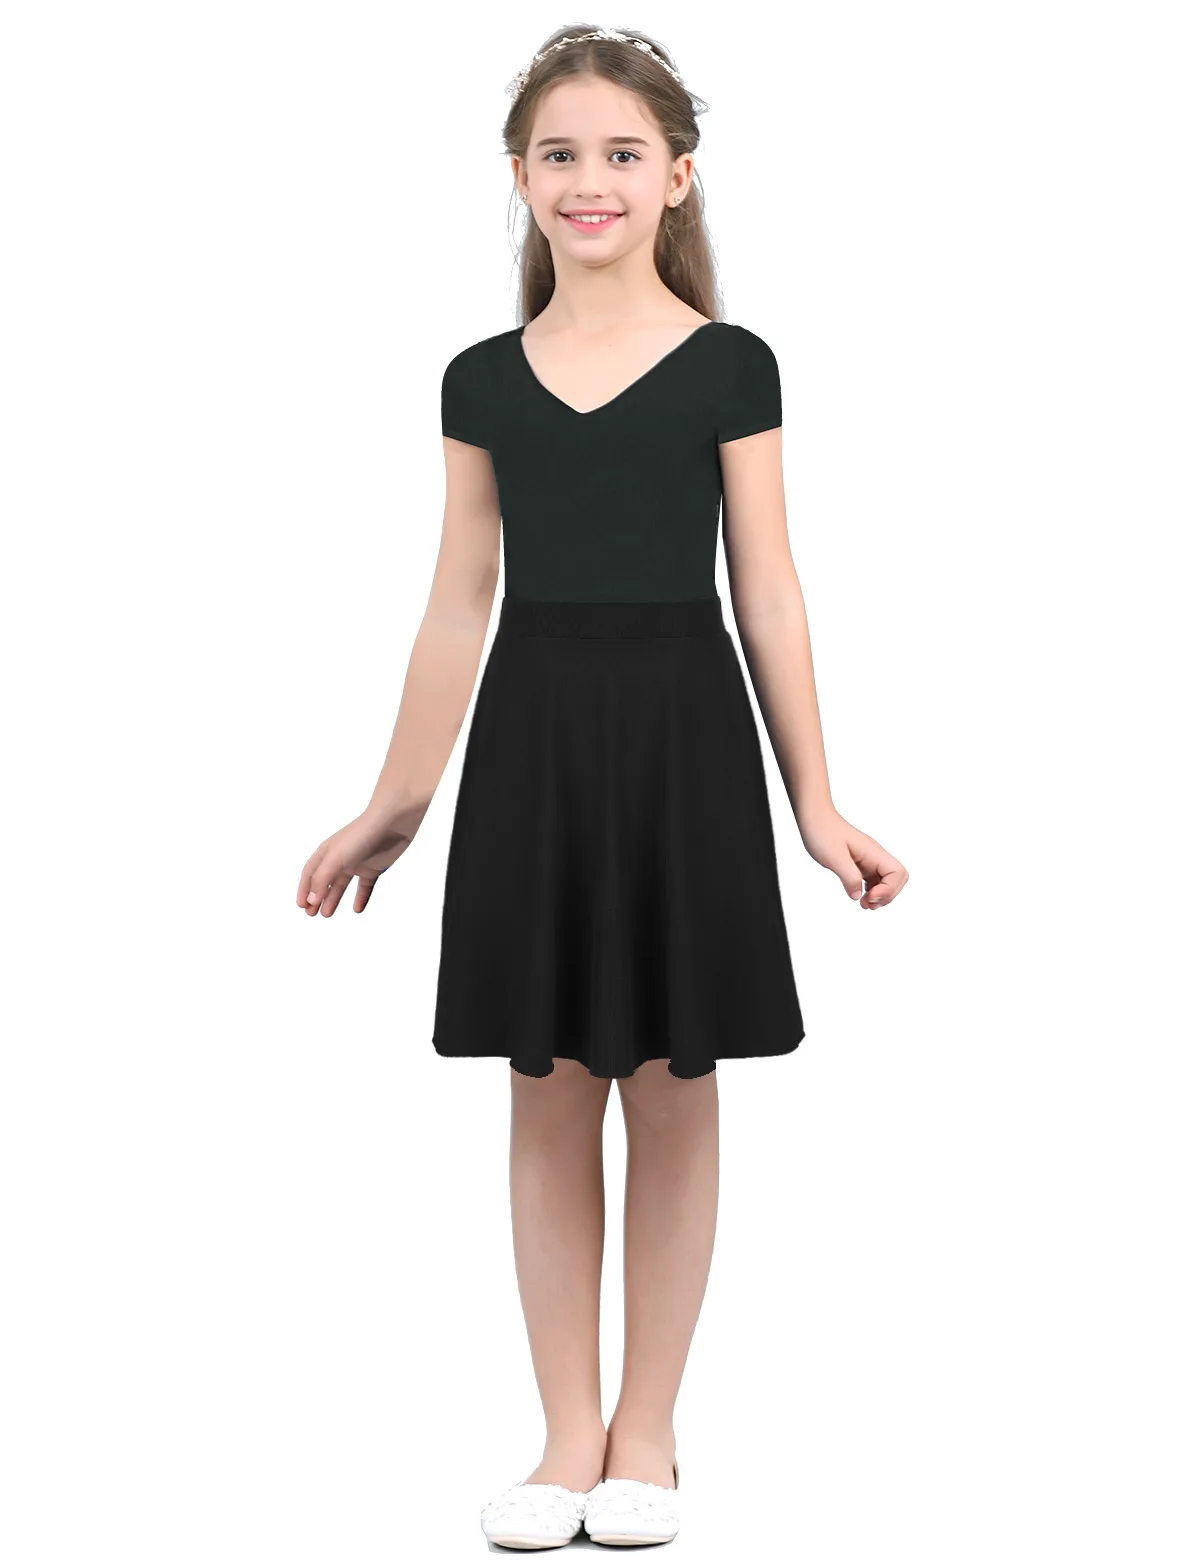 Kids Mini Skirt High Waist Casual Fashion Skater Skirts Esg16552 - China  Skirt and Skater Skirt price | Made-in-China.com